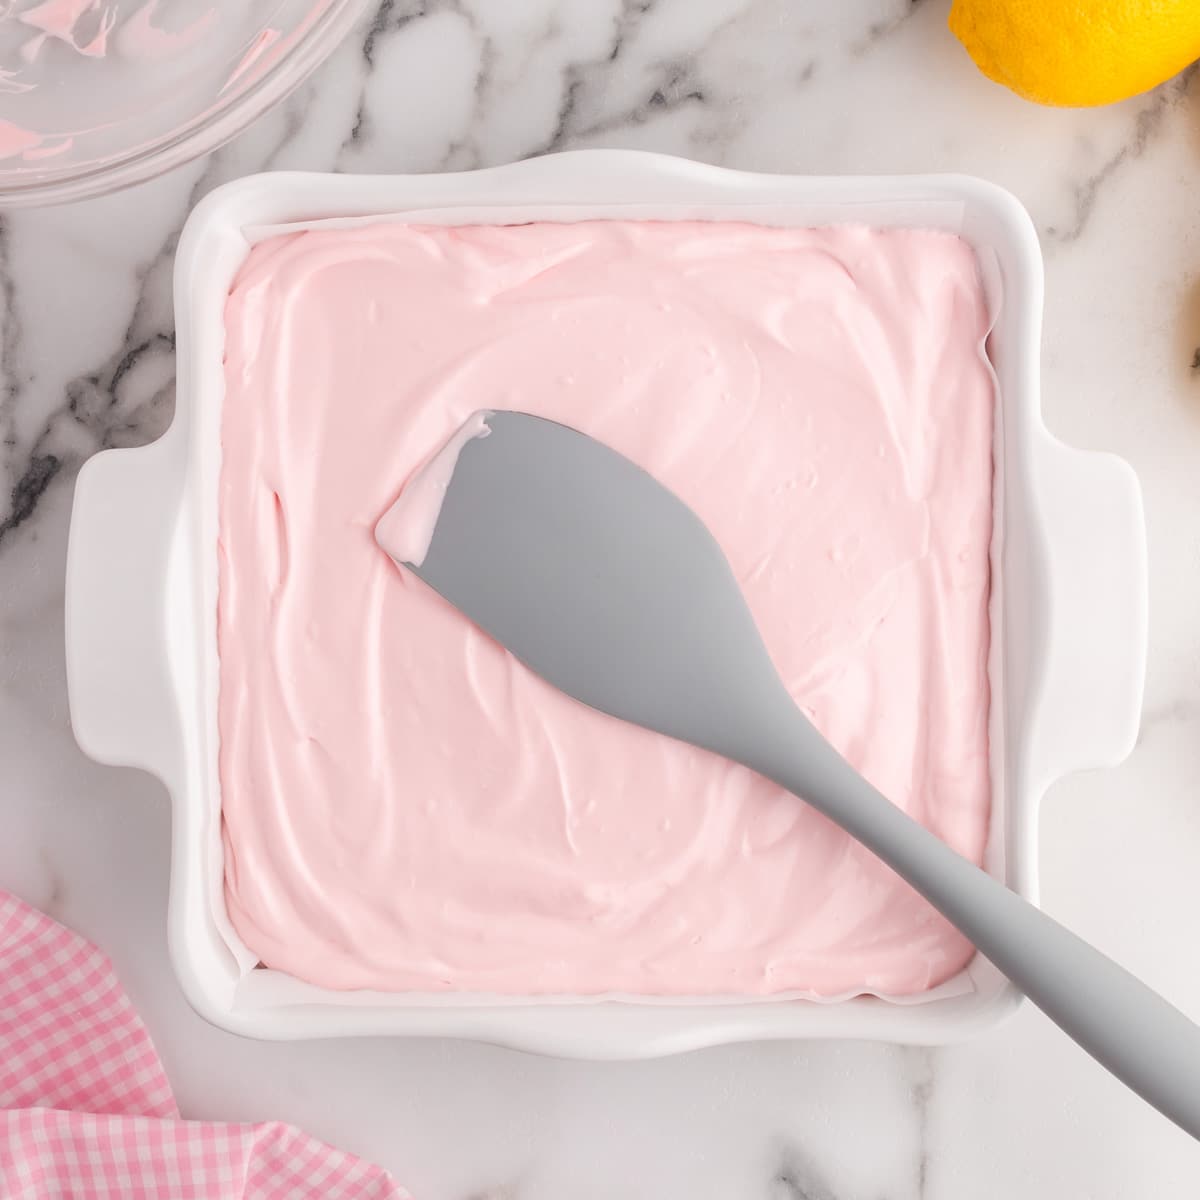 a spatula spreading pink lemonade filling in a baking pan